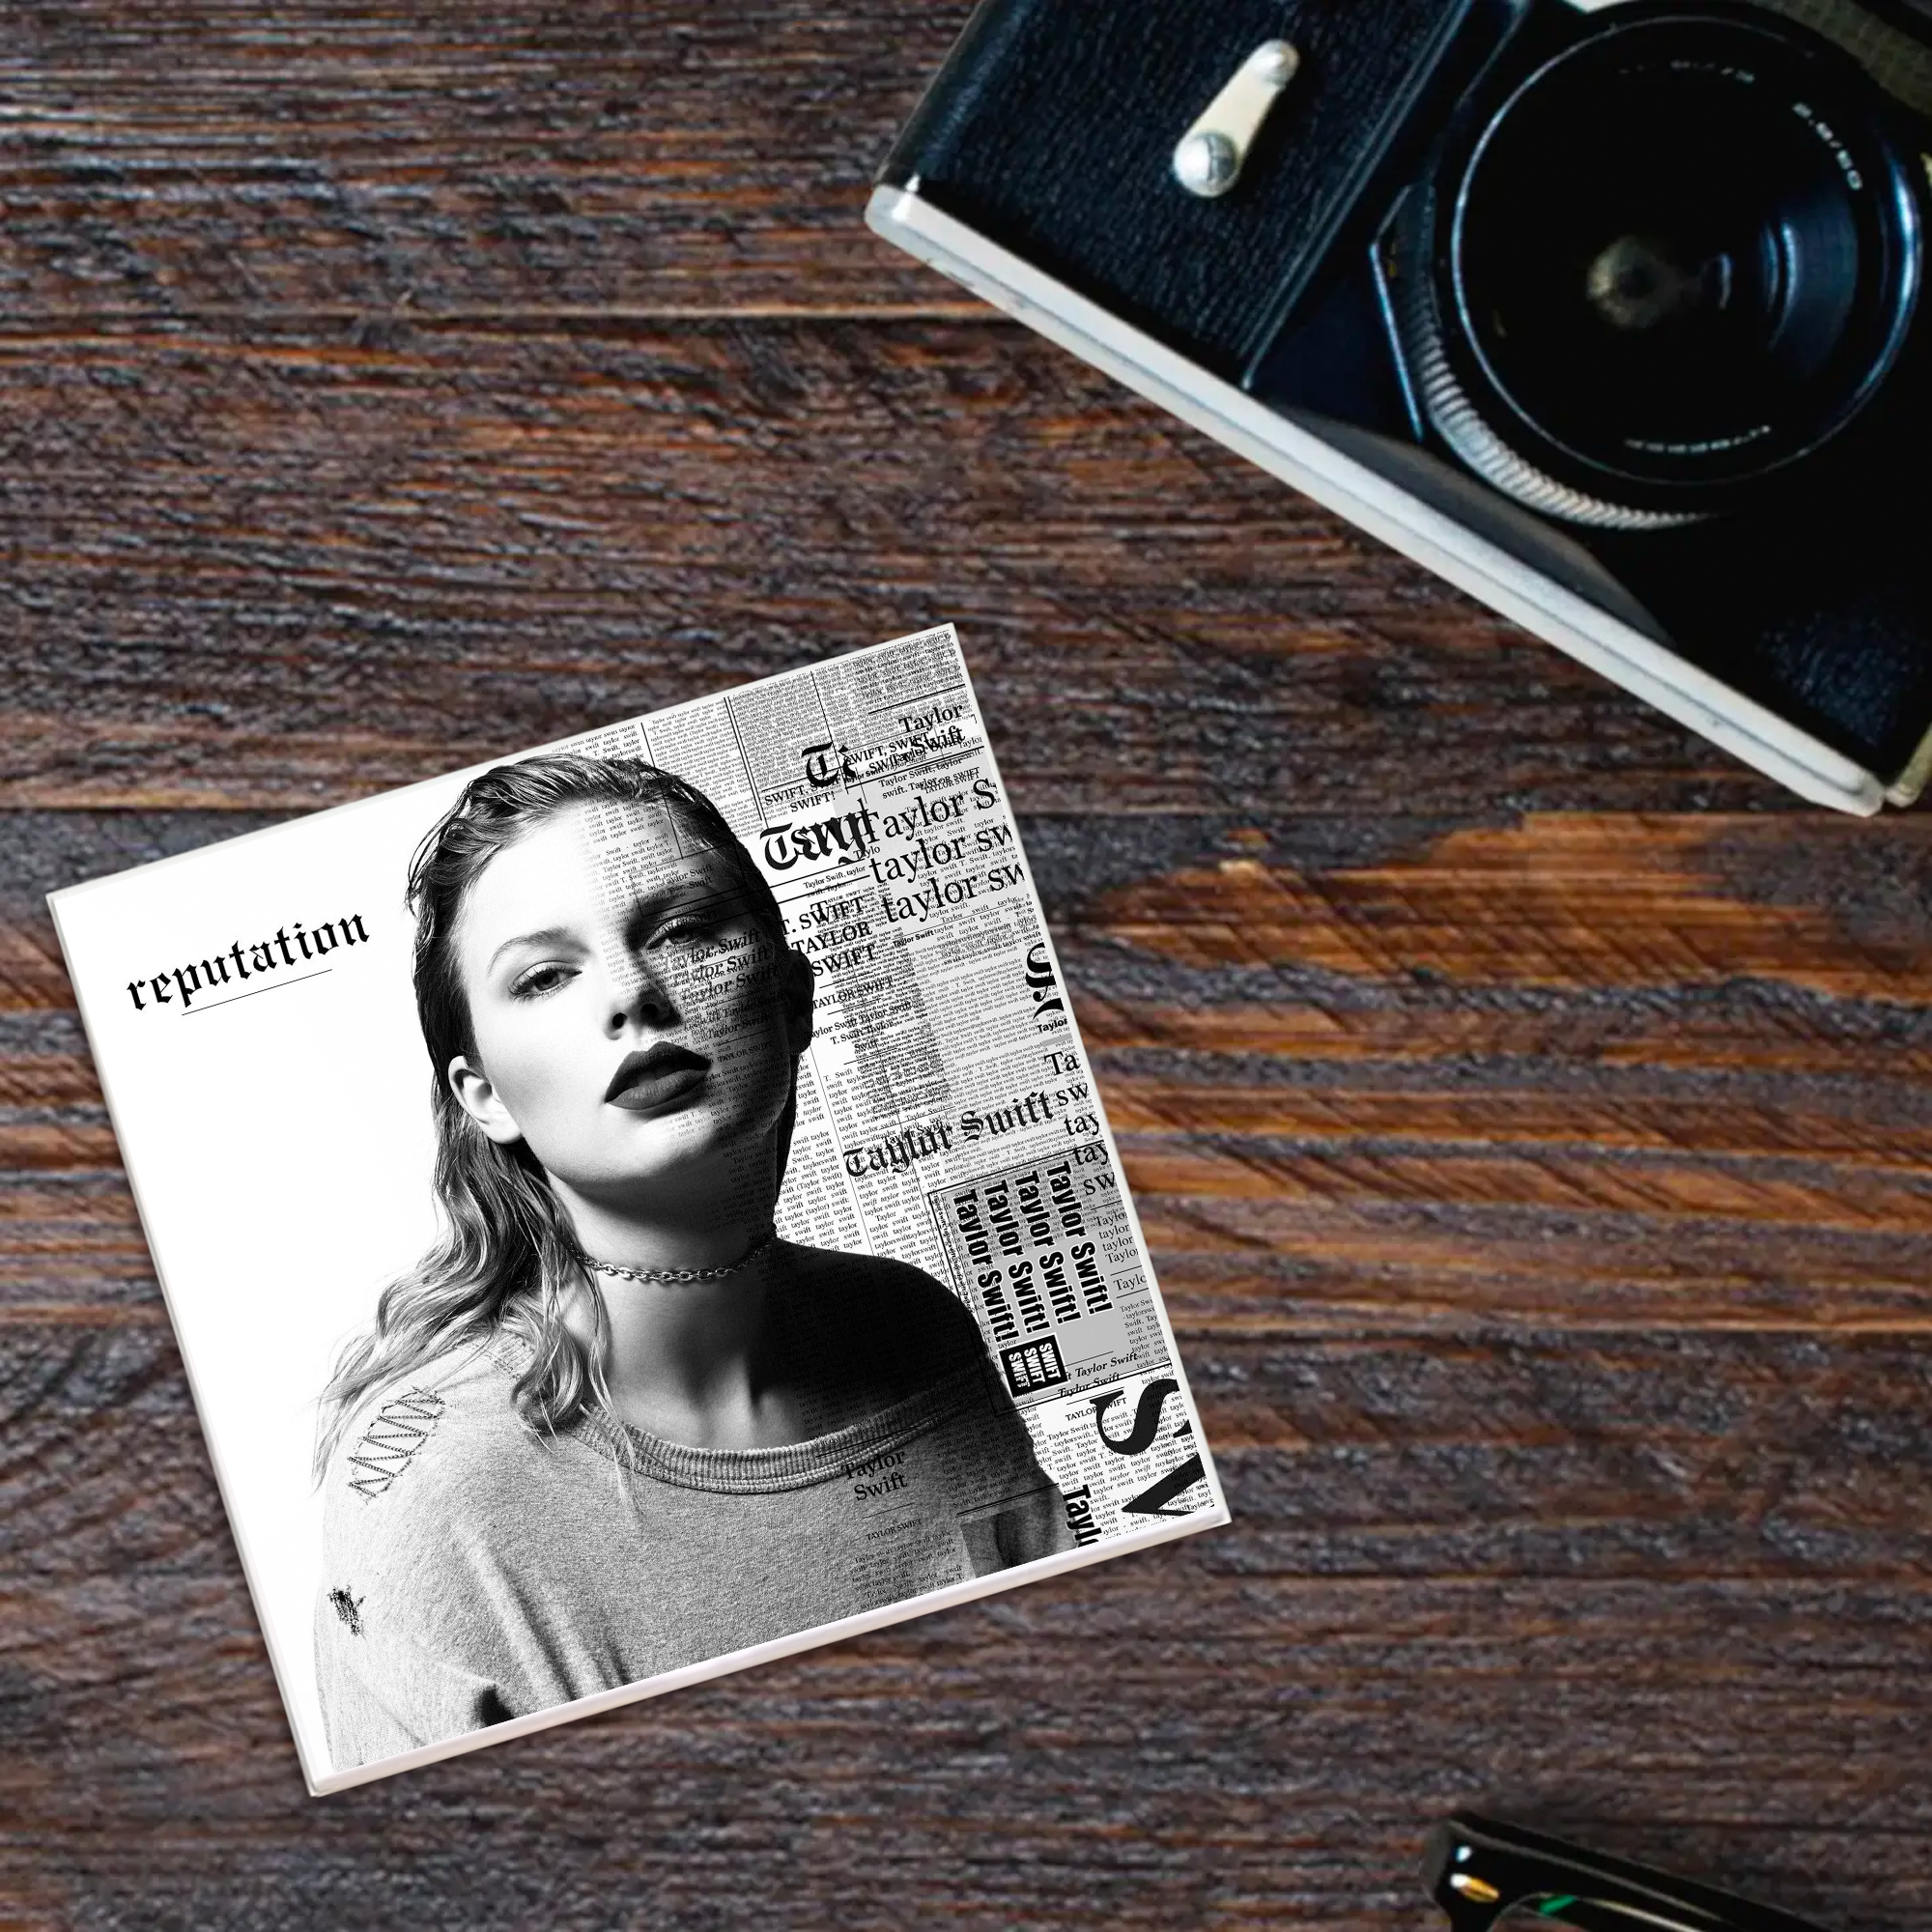 Taylor Swift REPUTATION CD